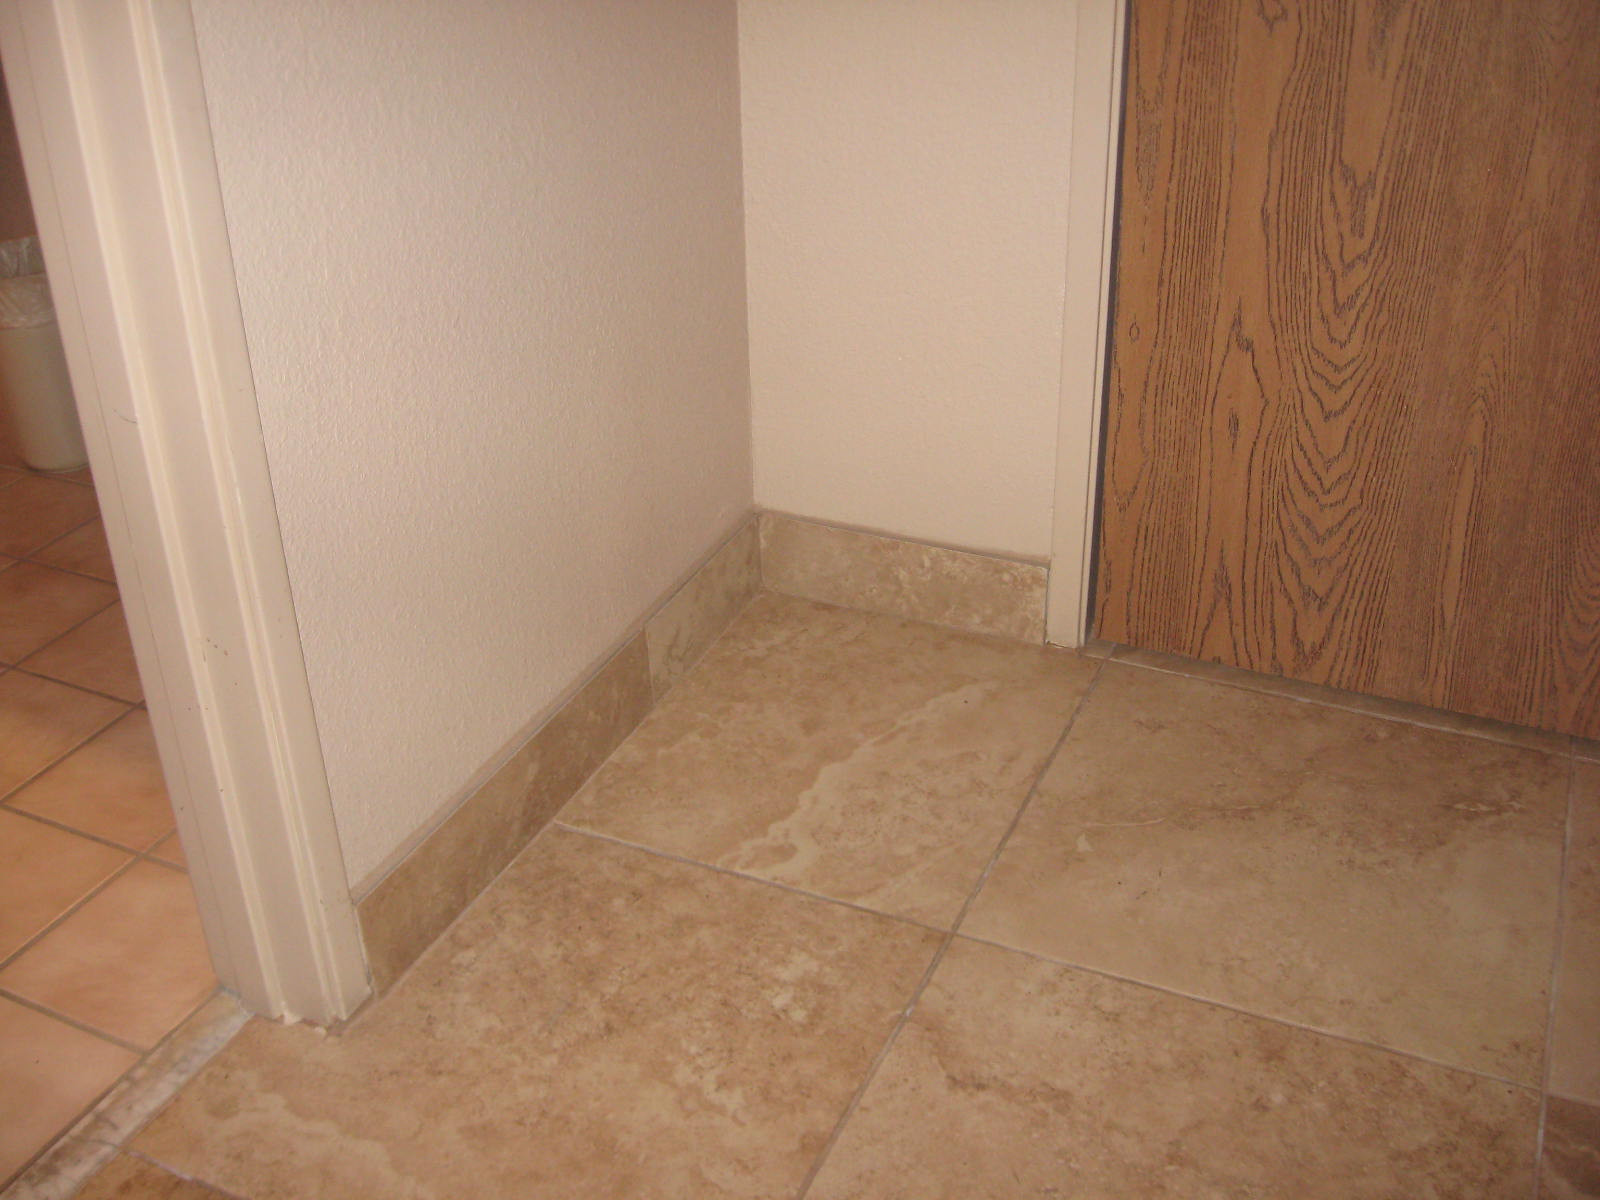 Tile Baseboard In Bathroom
 Hotel Accessible Rooms